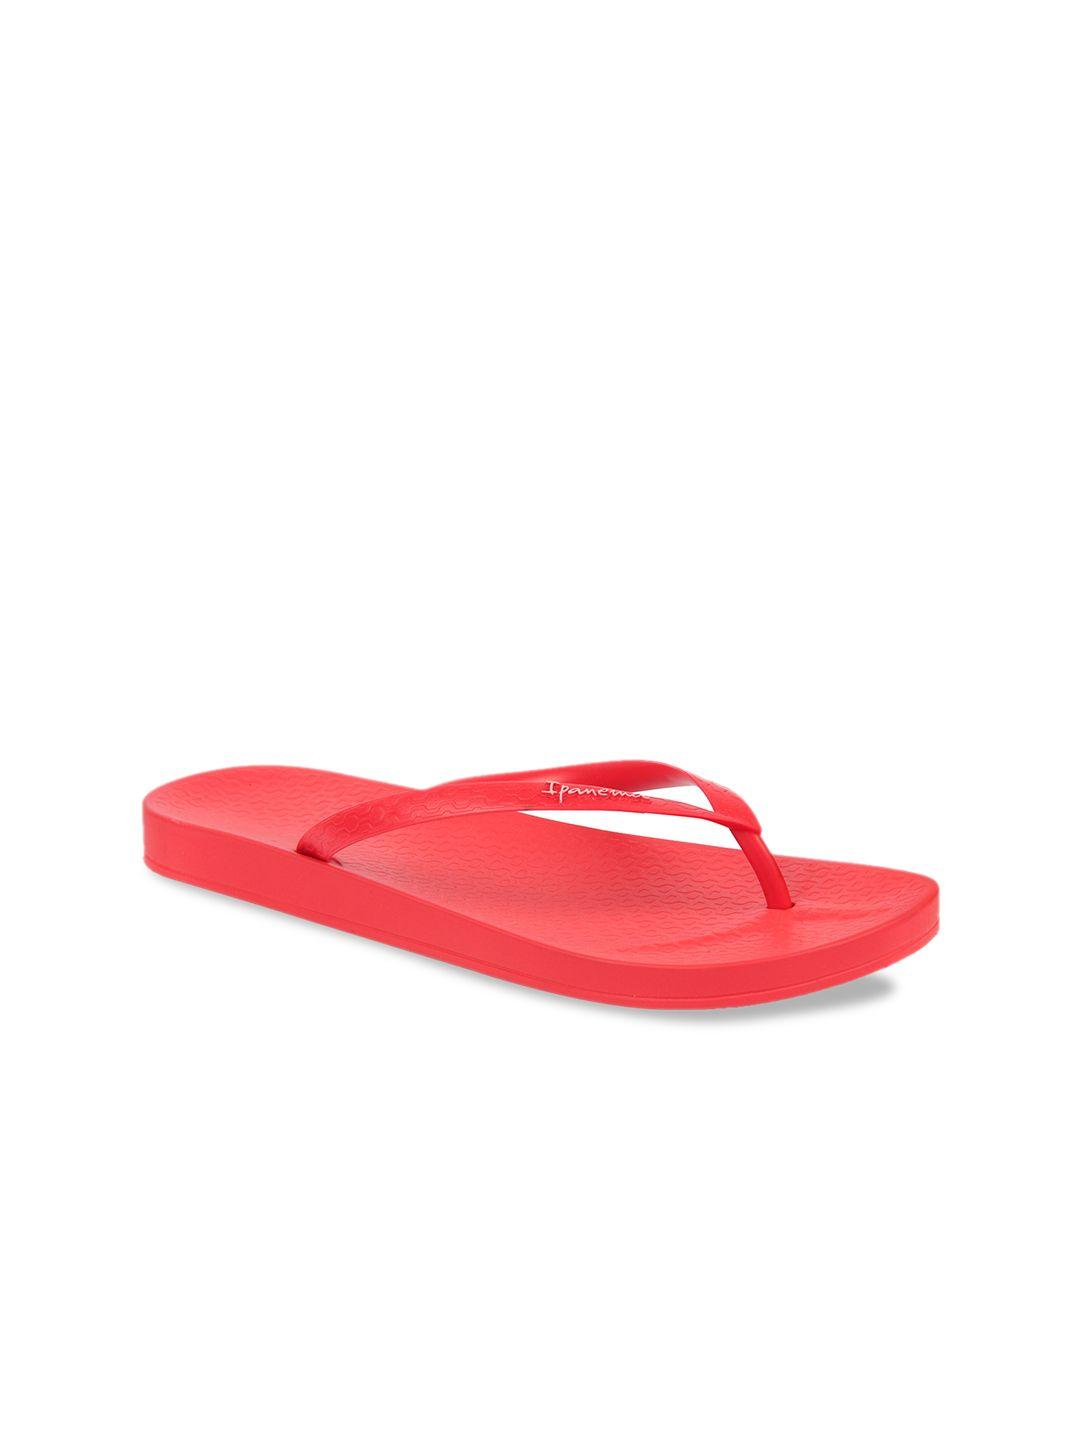 ipanema women red solid thong flip-flops